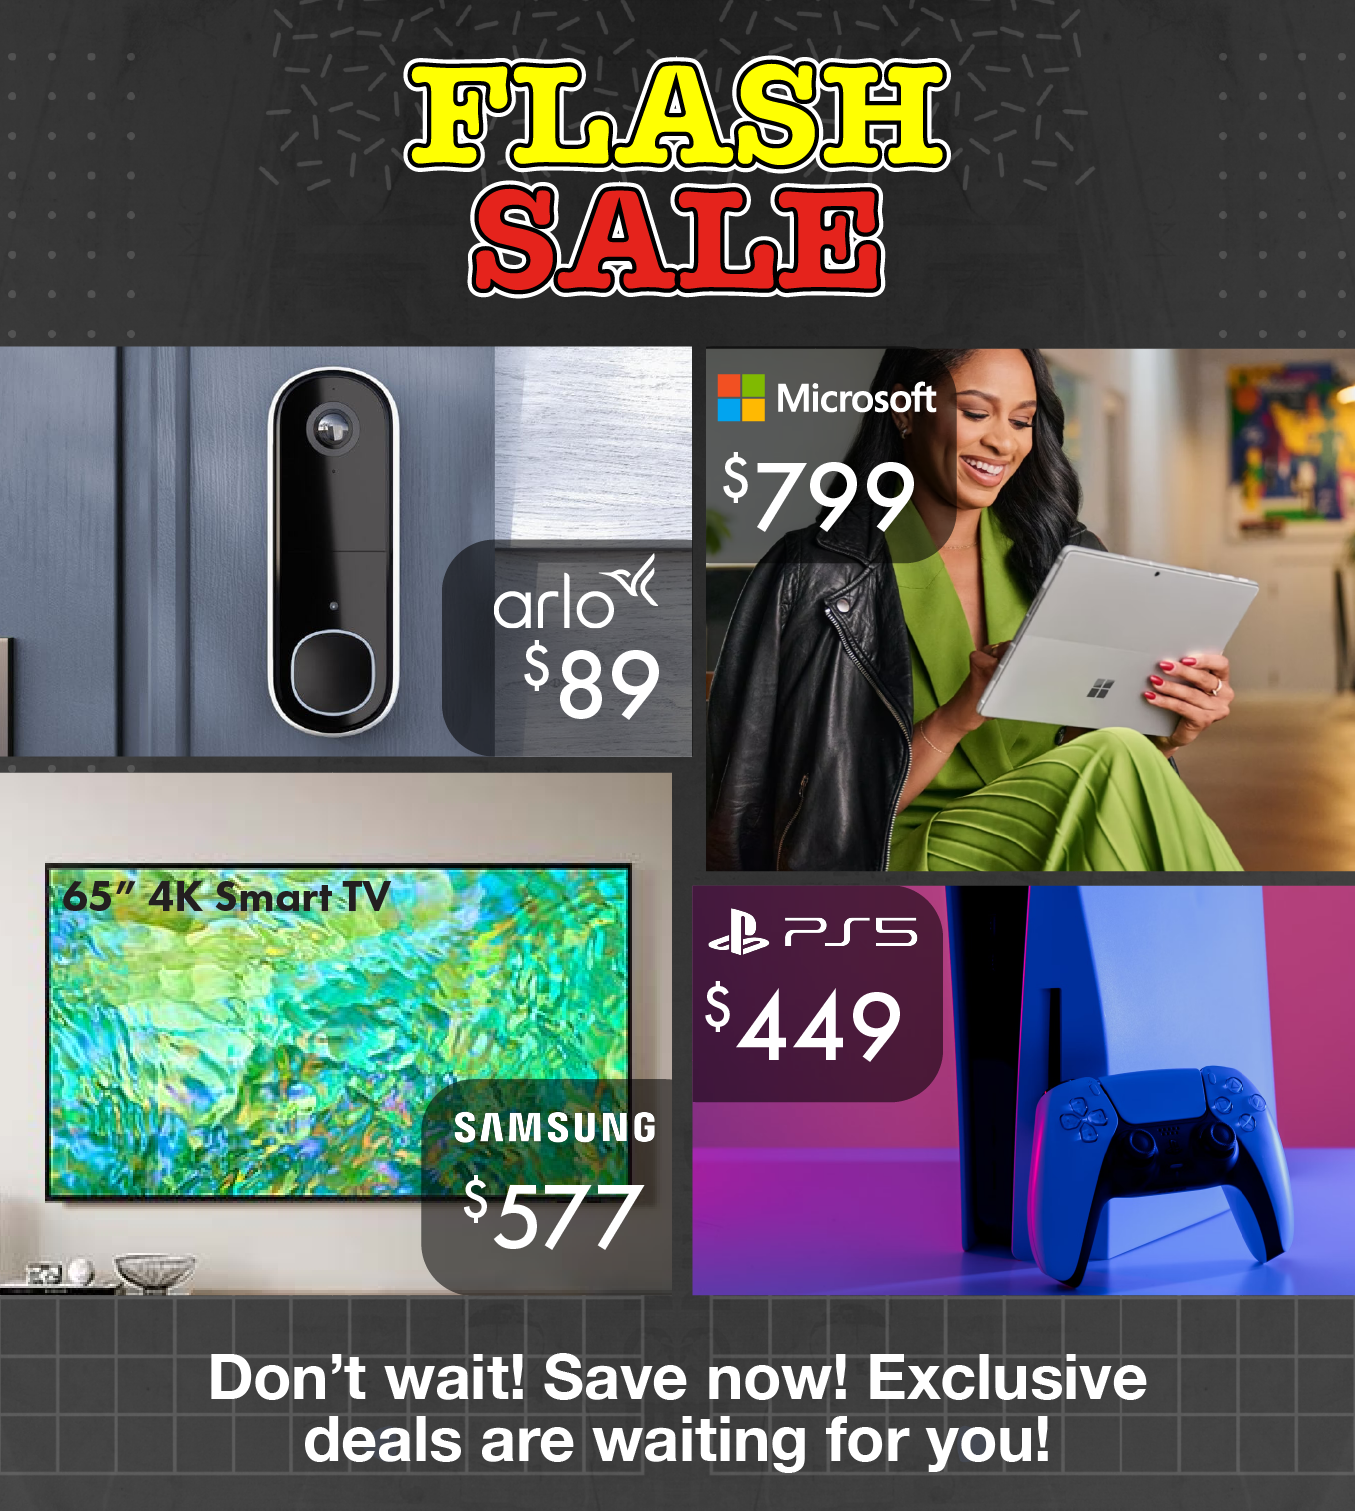 Don't miss our flash sale! Save now! Don't wait!